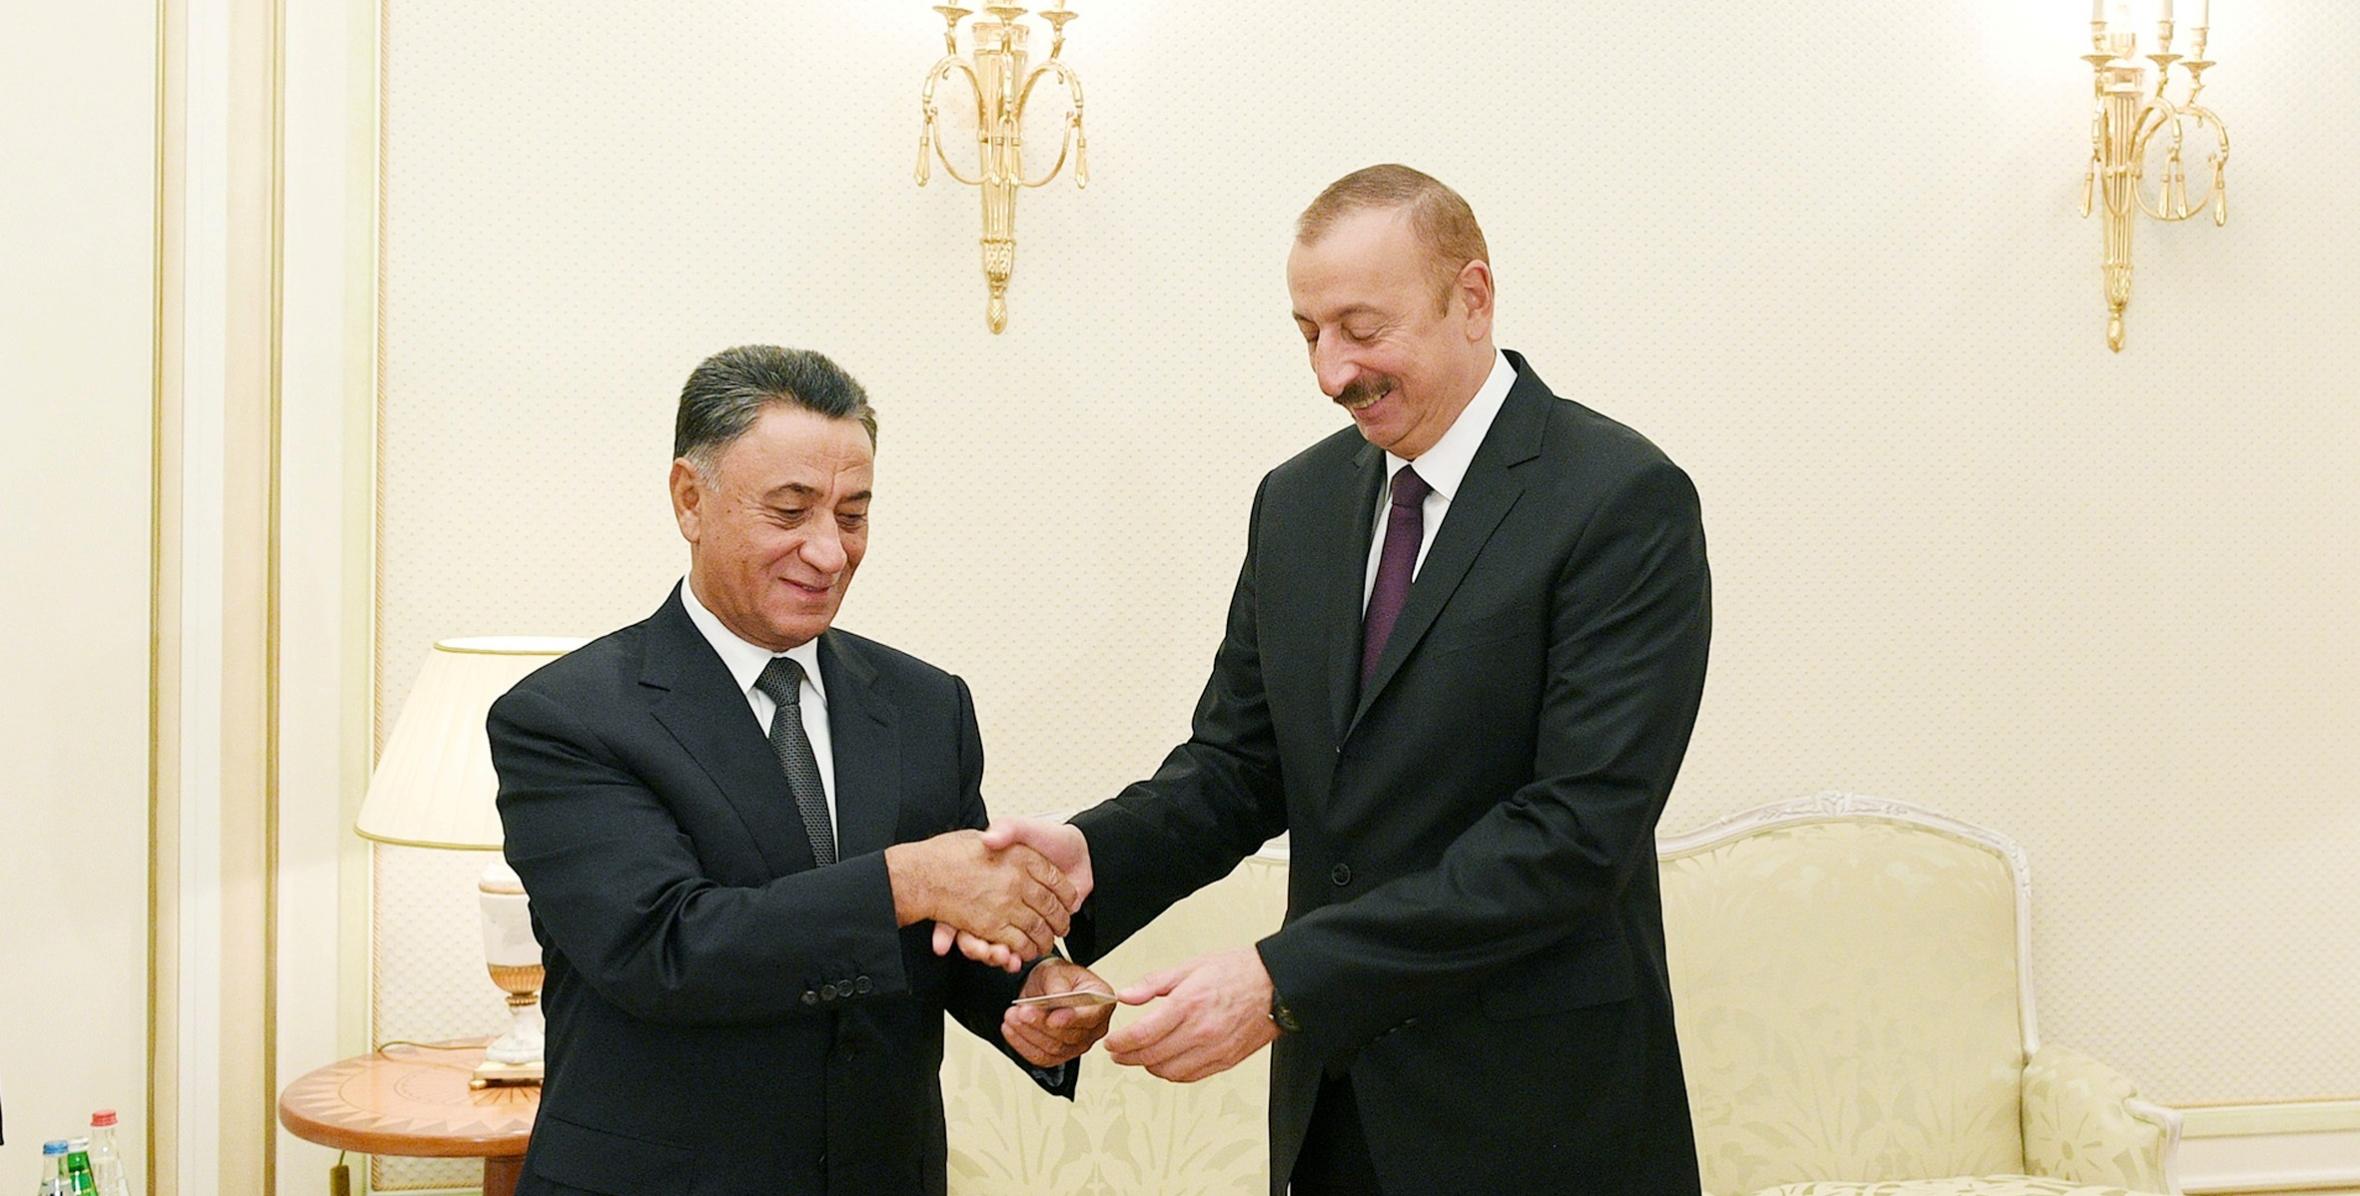 New generation biometric identity card No 1 presented to Ilham Aliyev